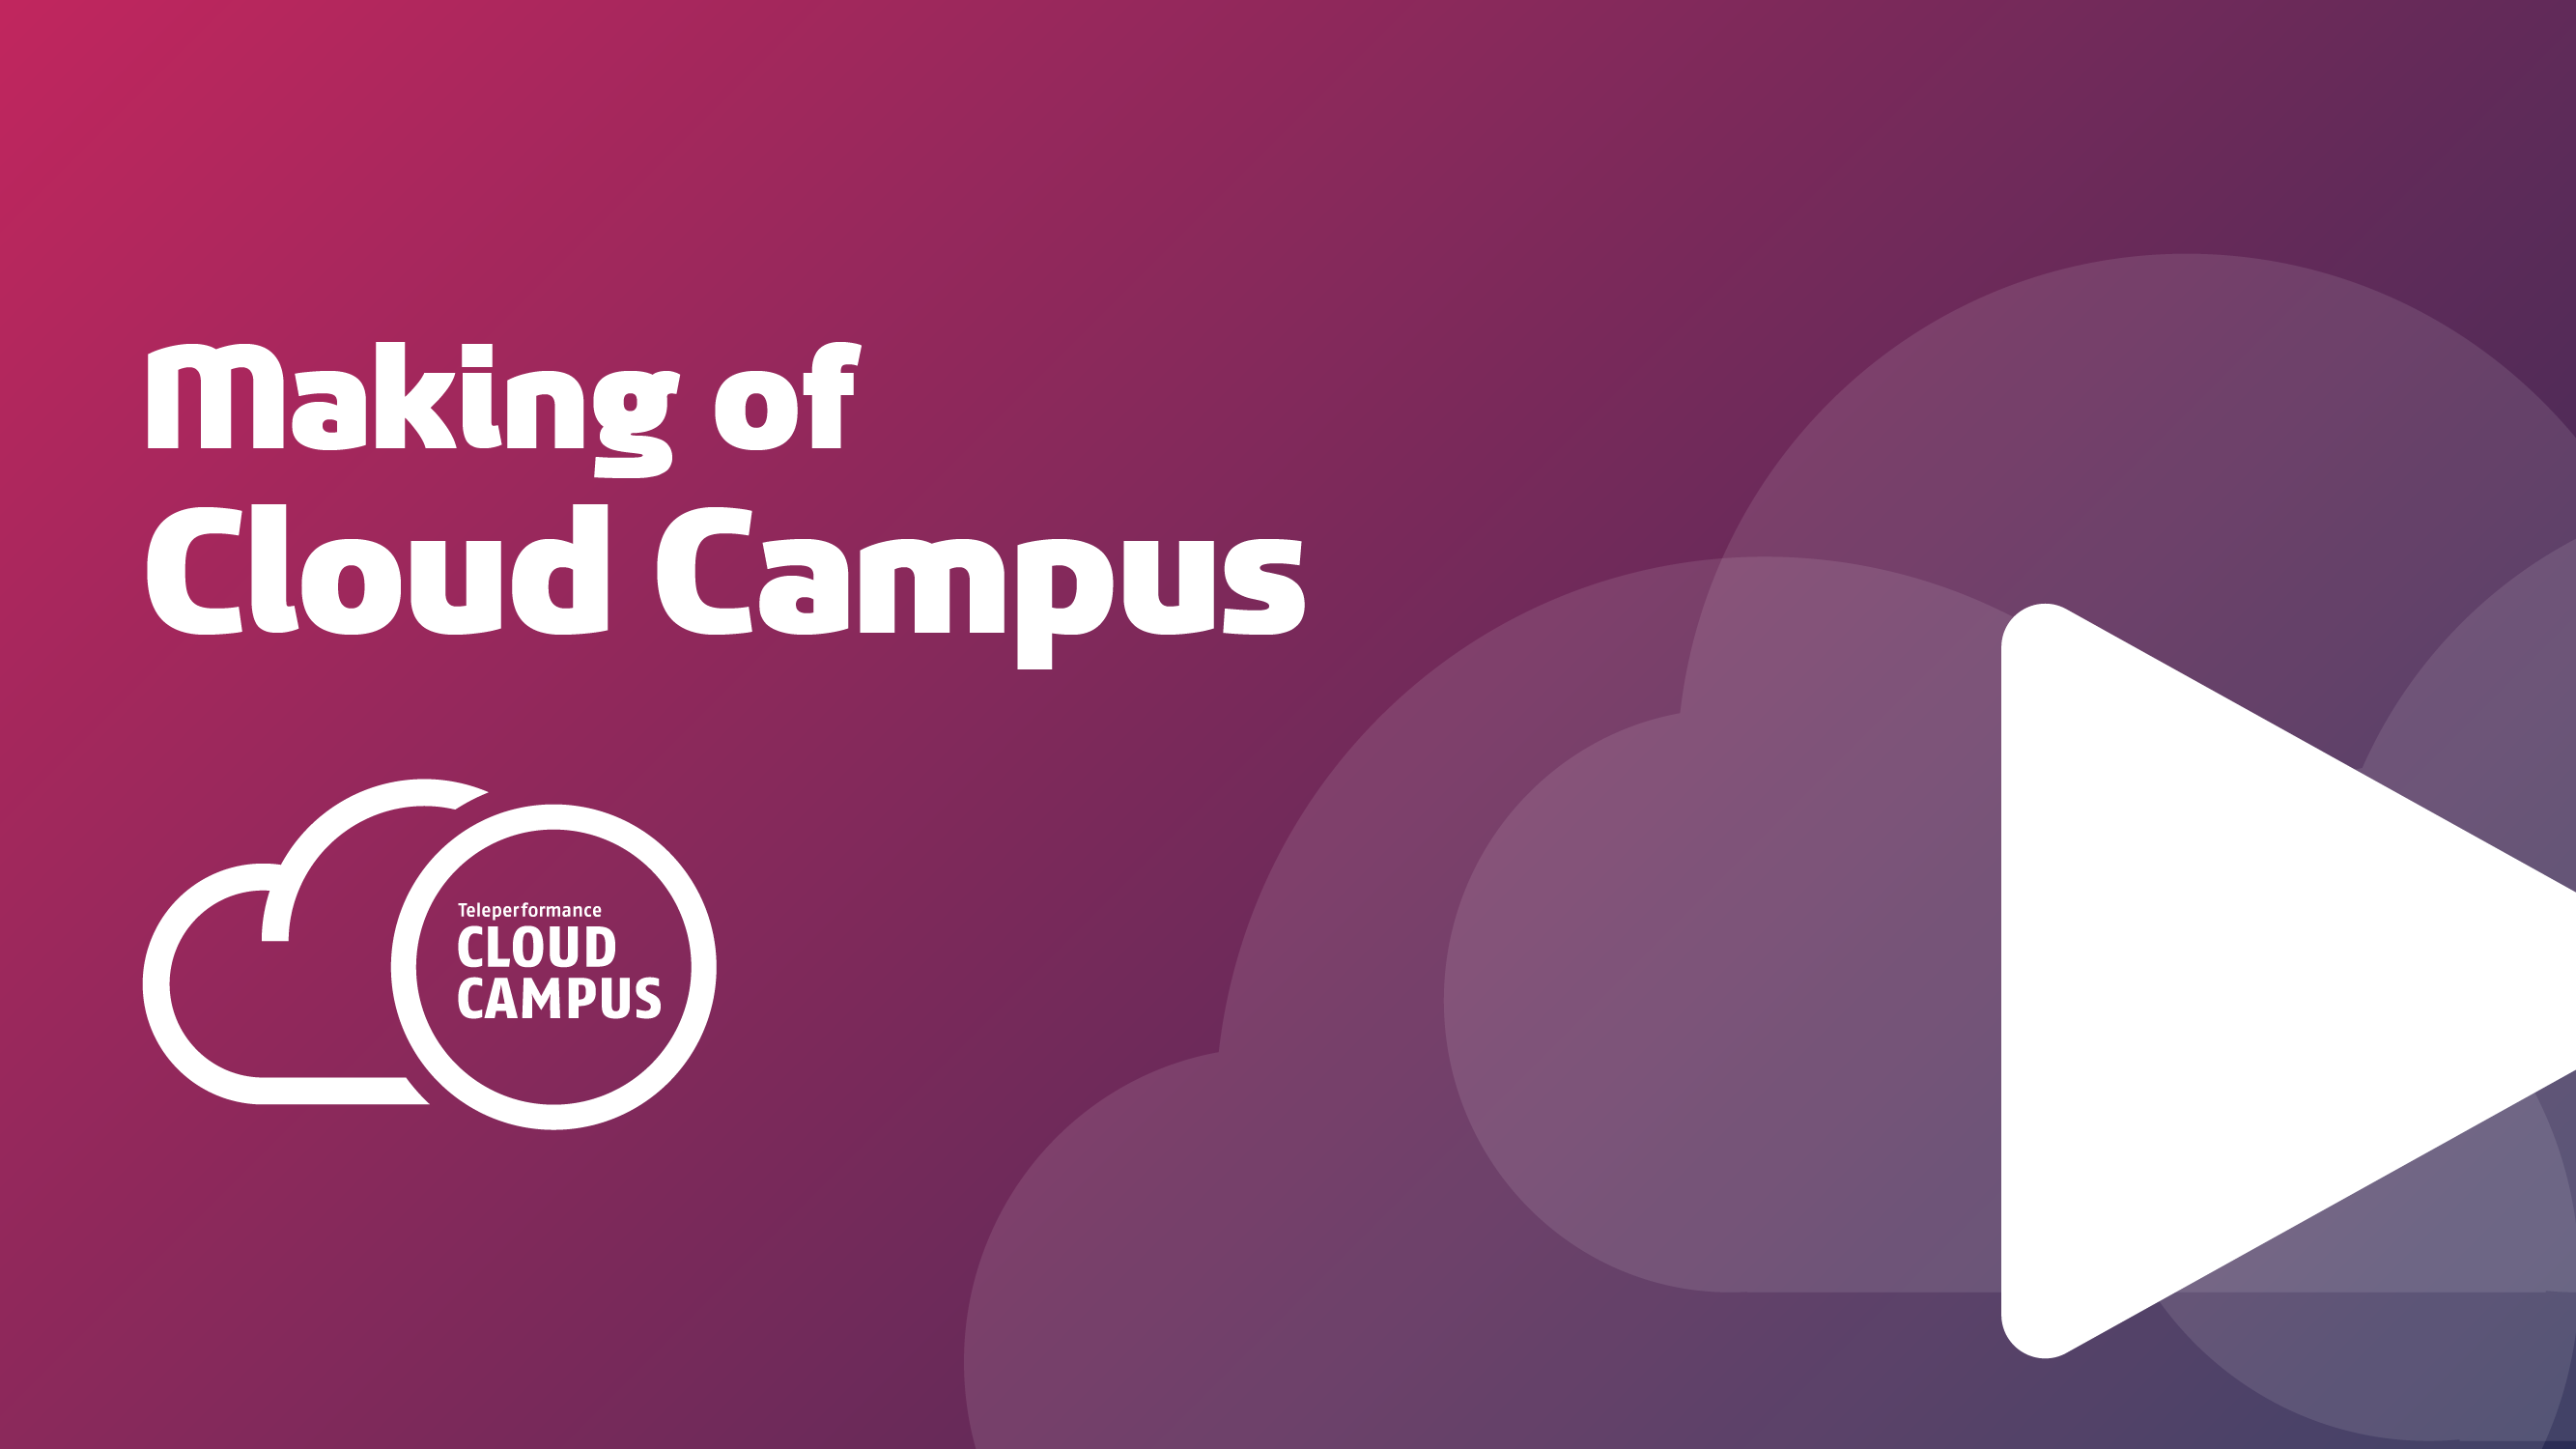 Cloud Campus concept